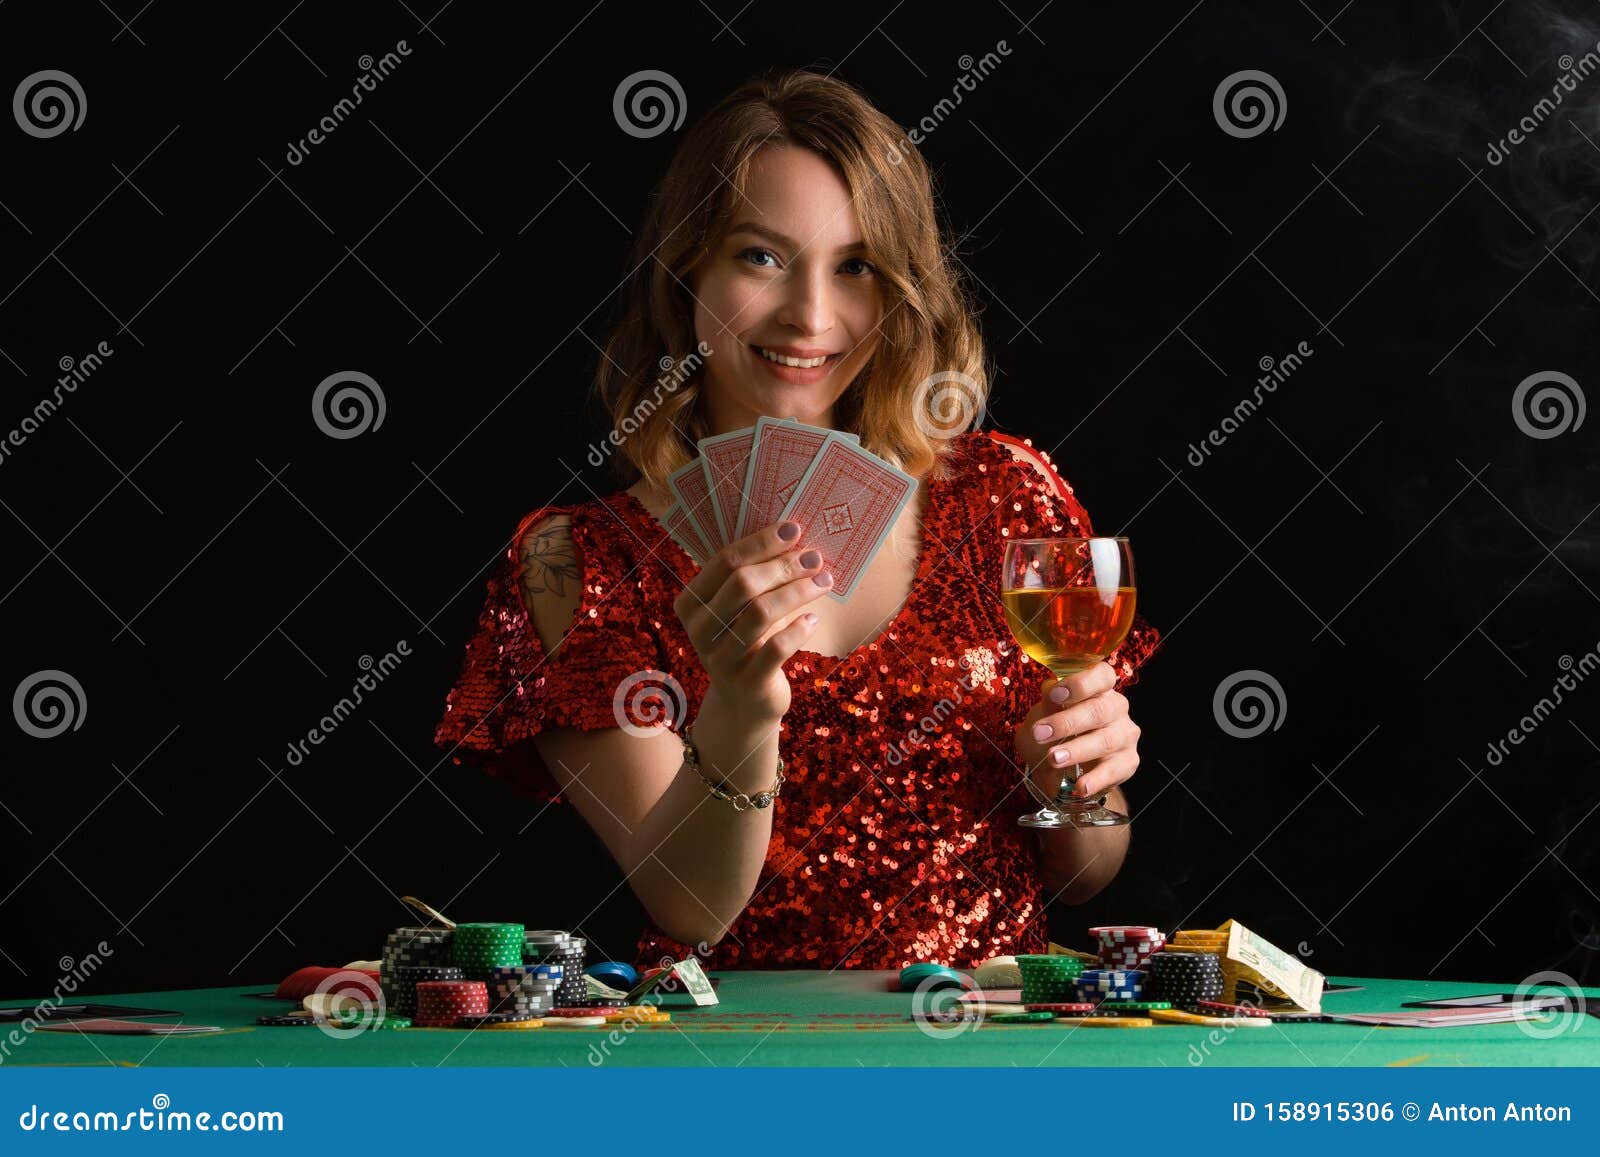 Prevodom hallmark casino no deposit bonus january 2020 Degree Xenoblade